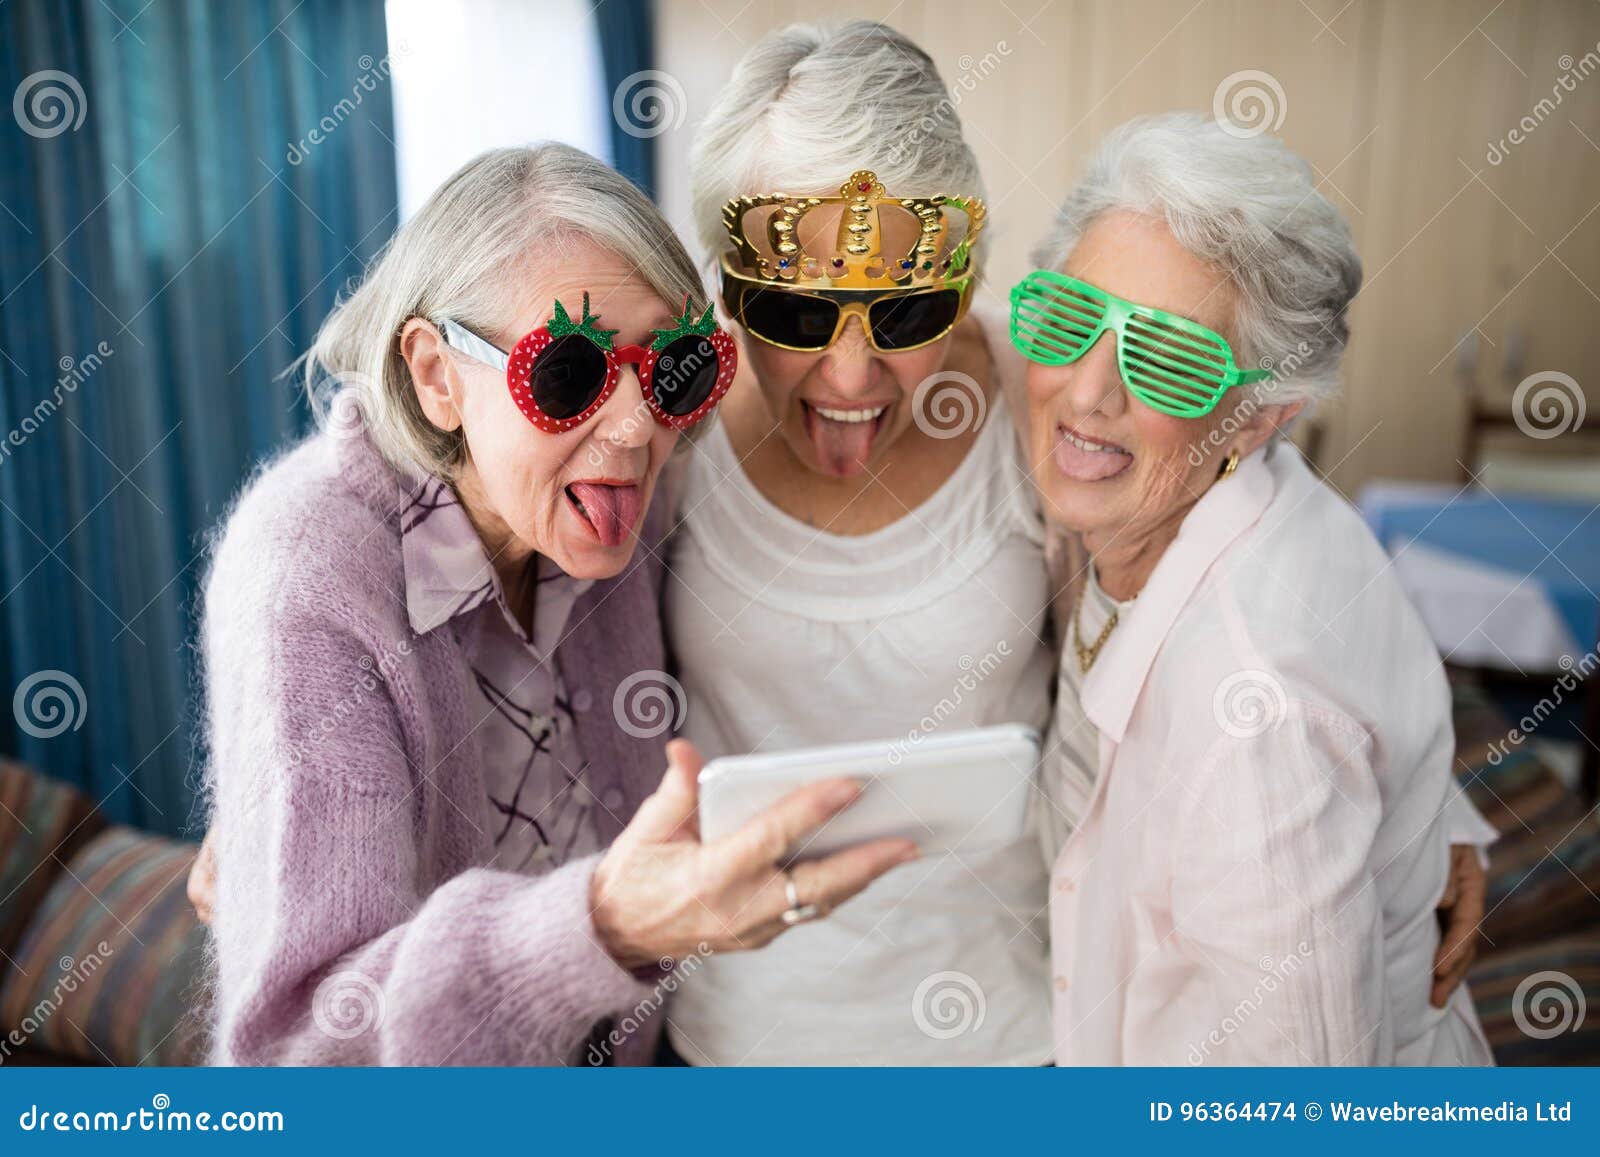 senior women wearing novelty glasses making face while taking selfie